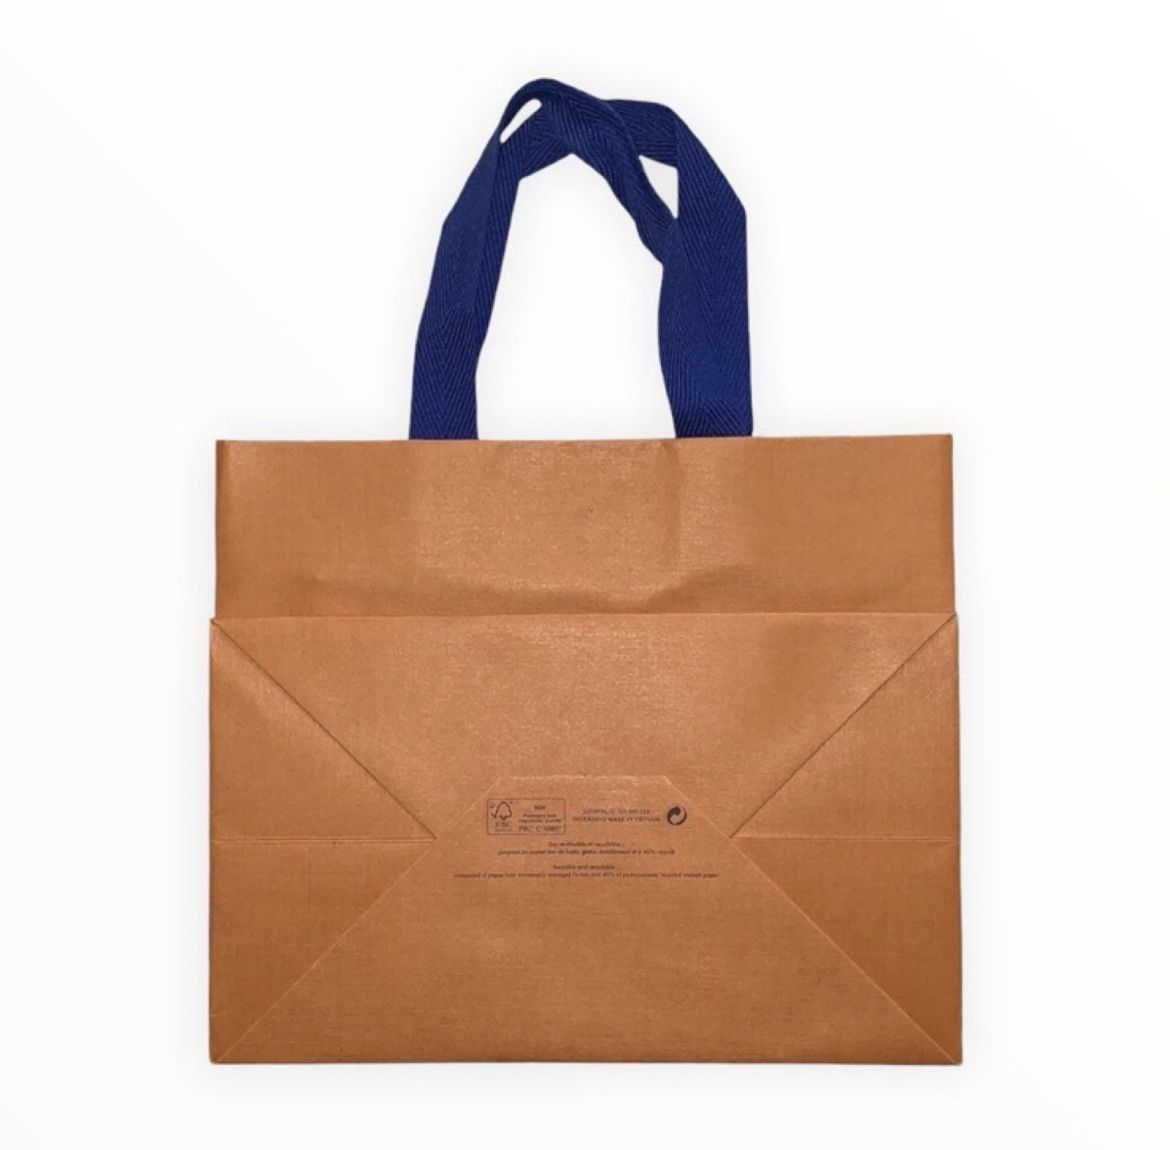 gift bags authentic louis vuitton paper bag